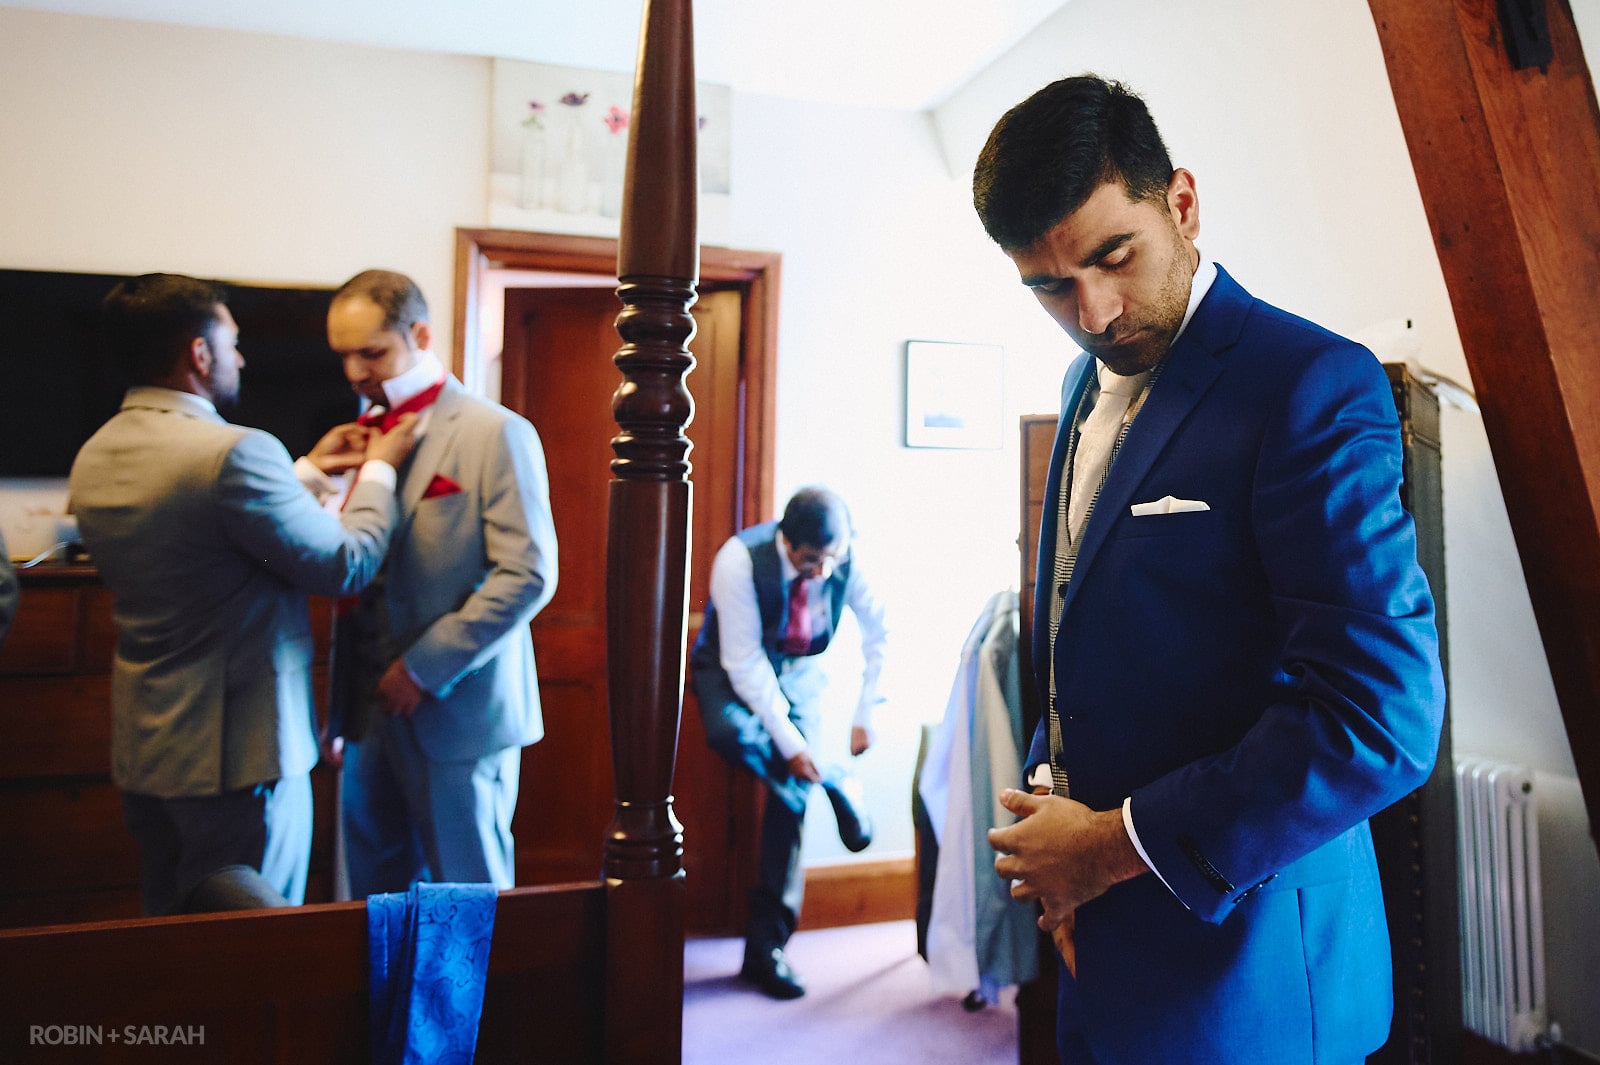 Groom and groomsmen prepare for wedding